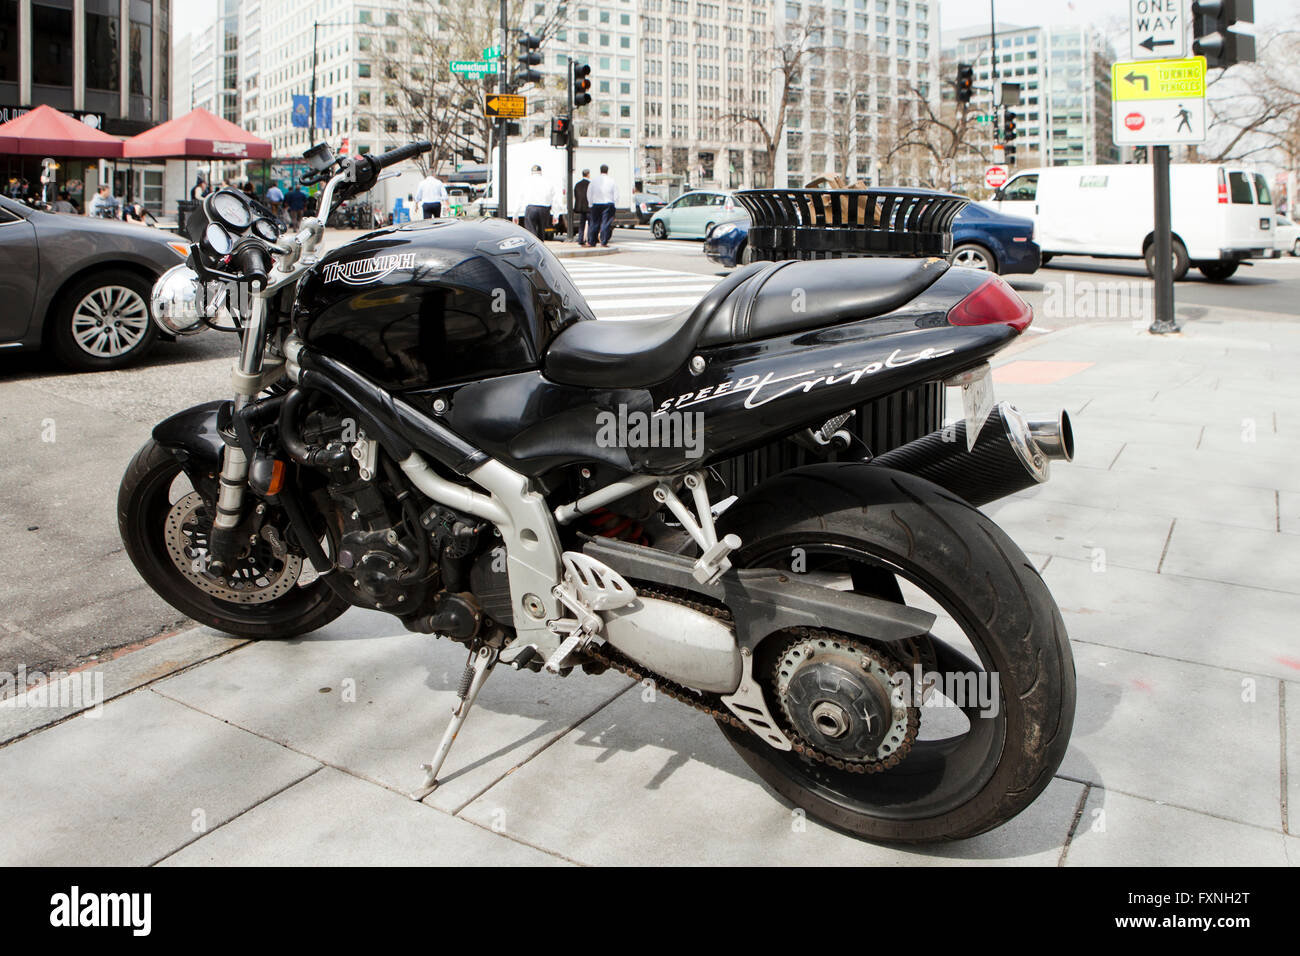 Triumph Speed Triple motorcycle parked on sidewalk - Washington, DC USA Stock Photo